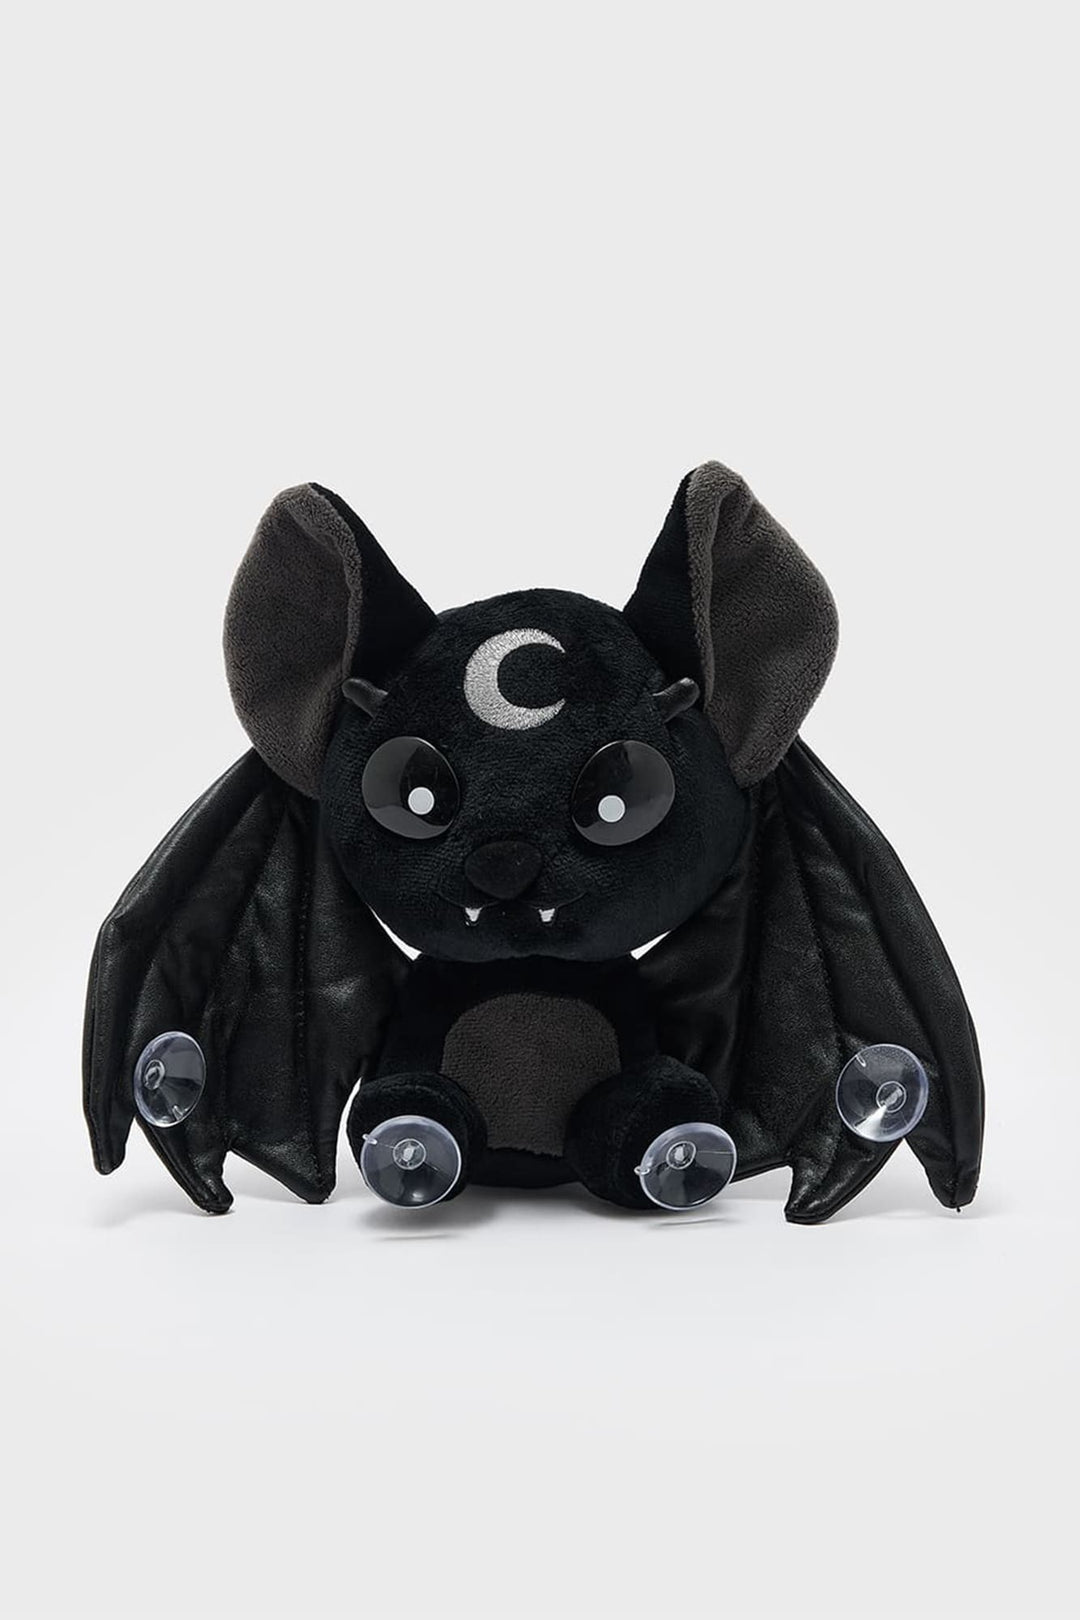 creepy cute stuffed bat toy